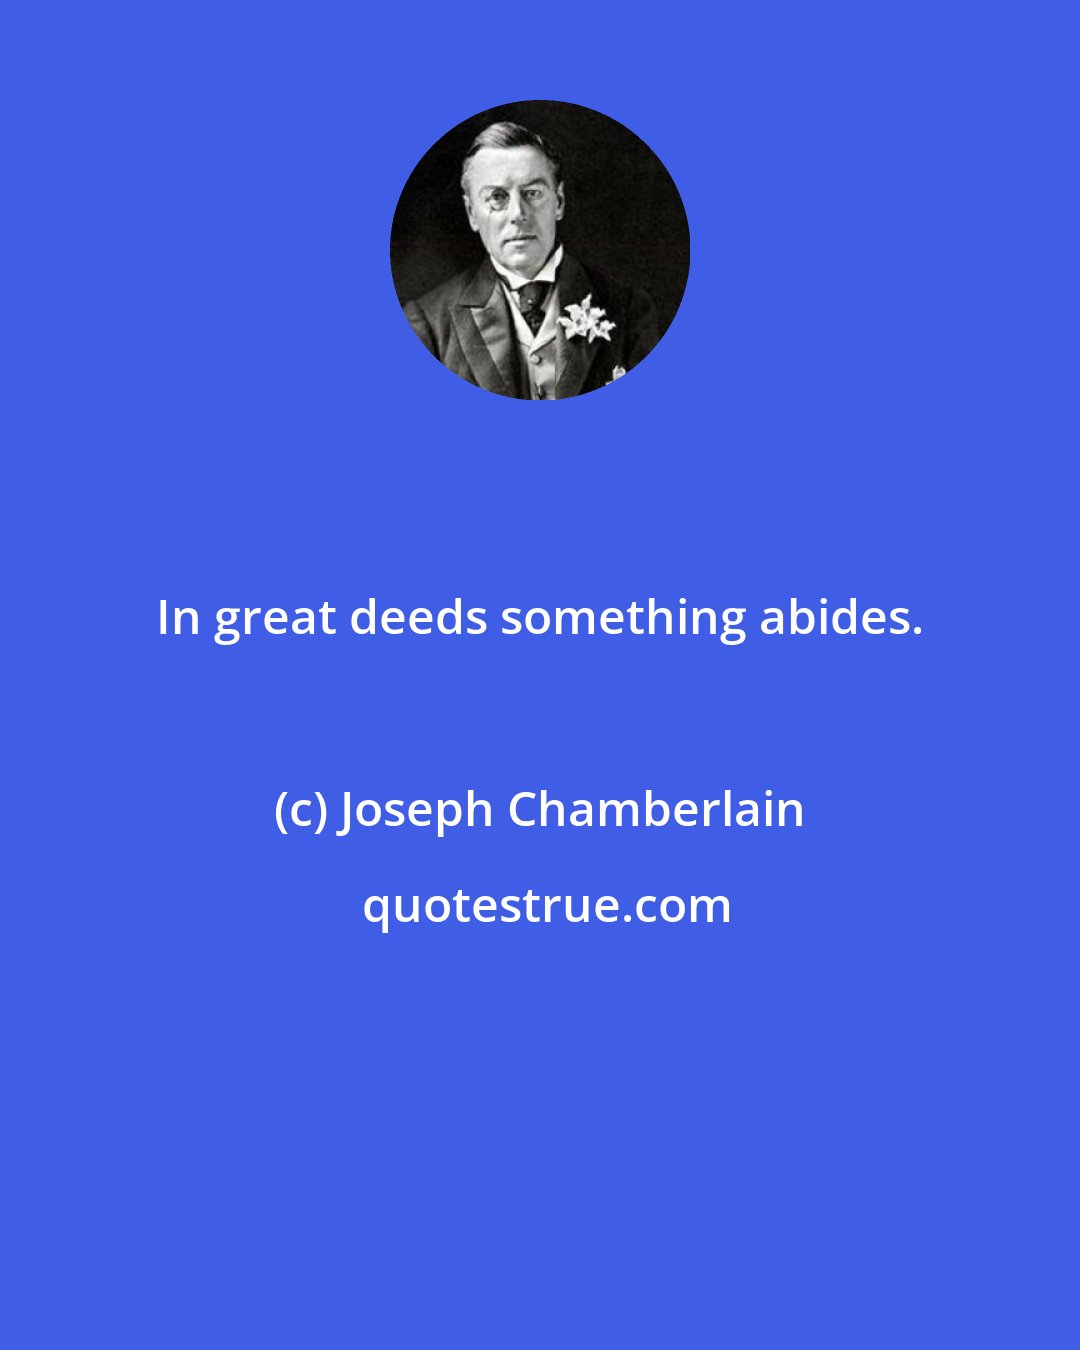 Joseph Chamberlain: In great deeds something abides.